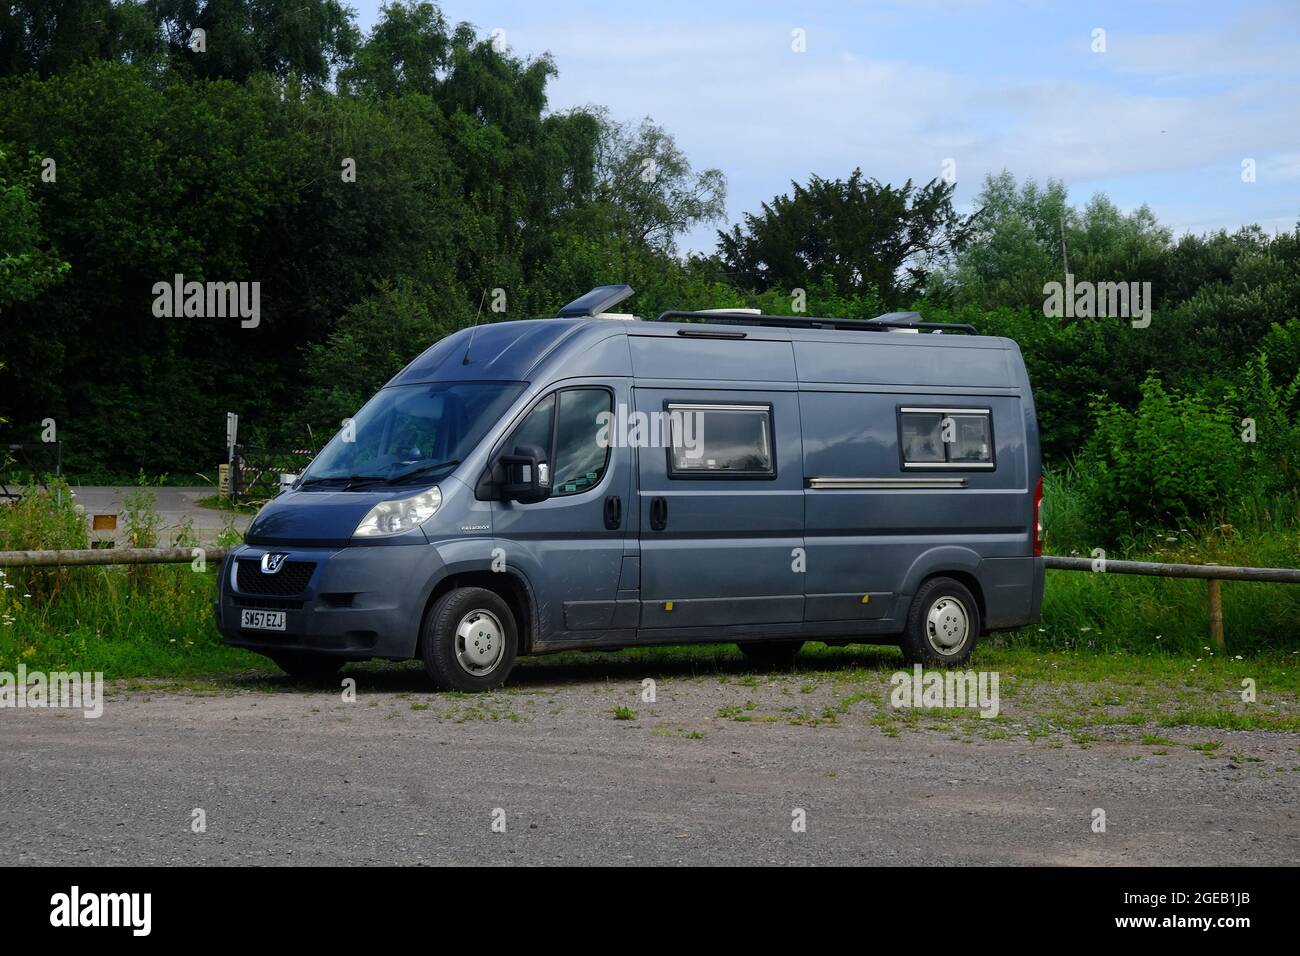 August 2021 - Grey Peugeot Campervan Stock Photo - Alamy